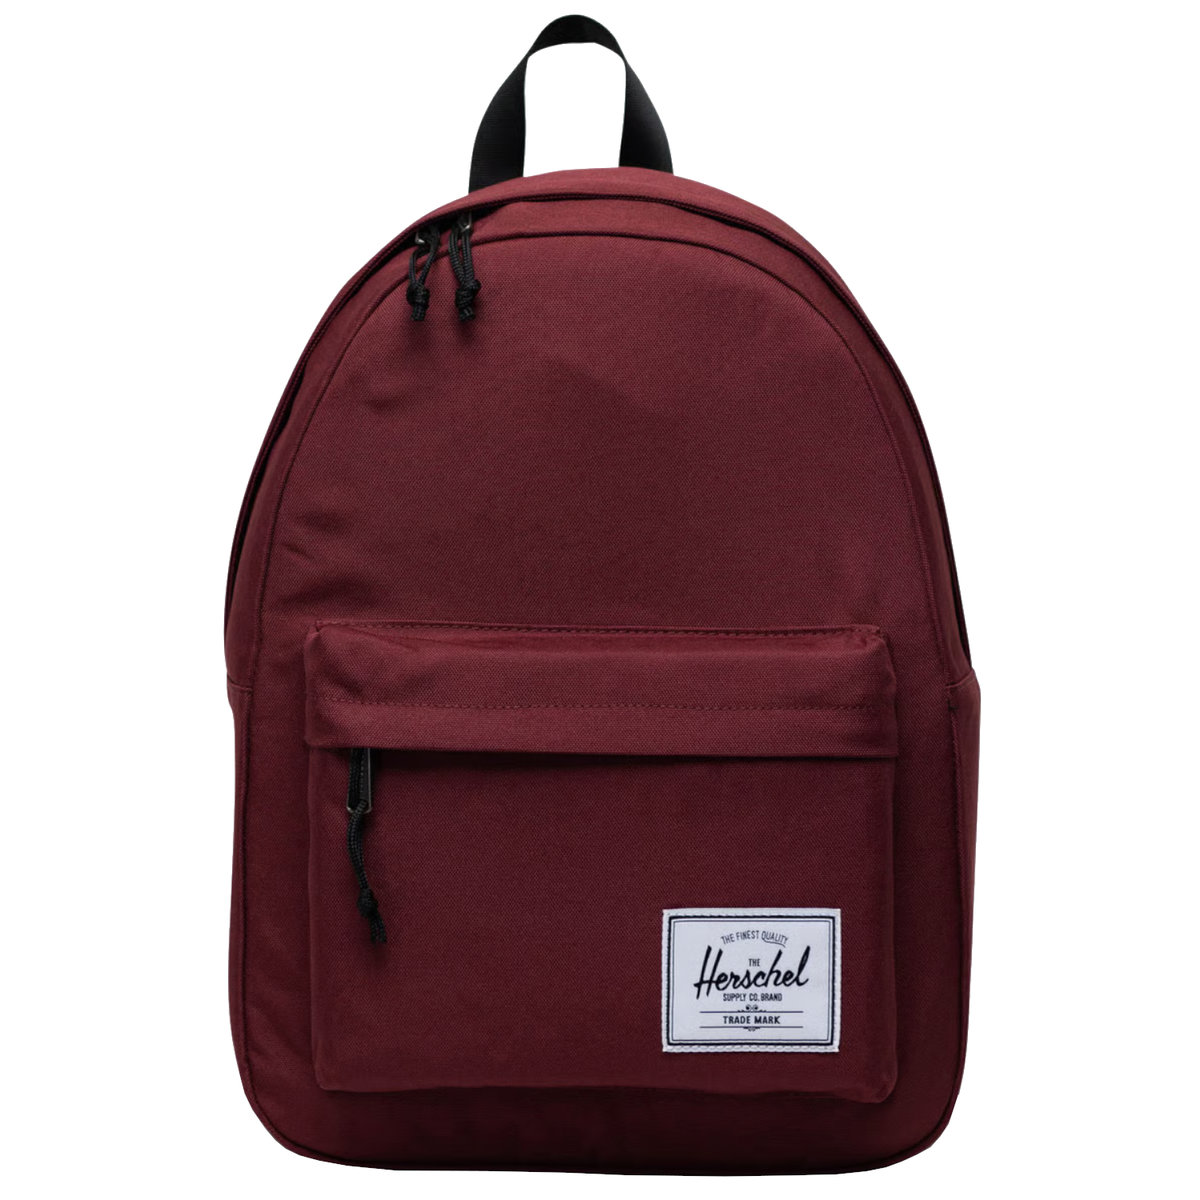 Herschel Classic Backpack 11377-05655, Bordowe Plecak, pojemność: 20 L